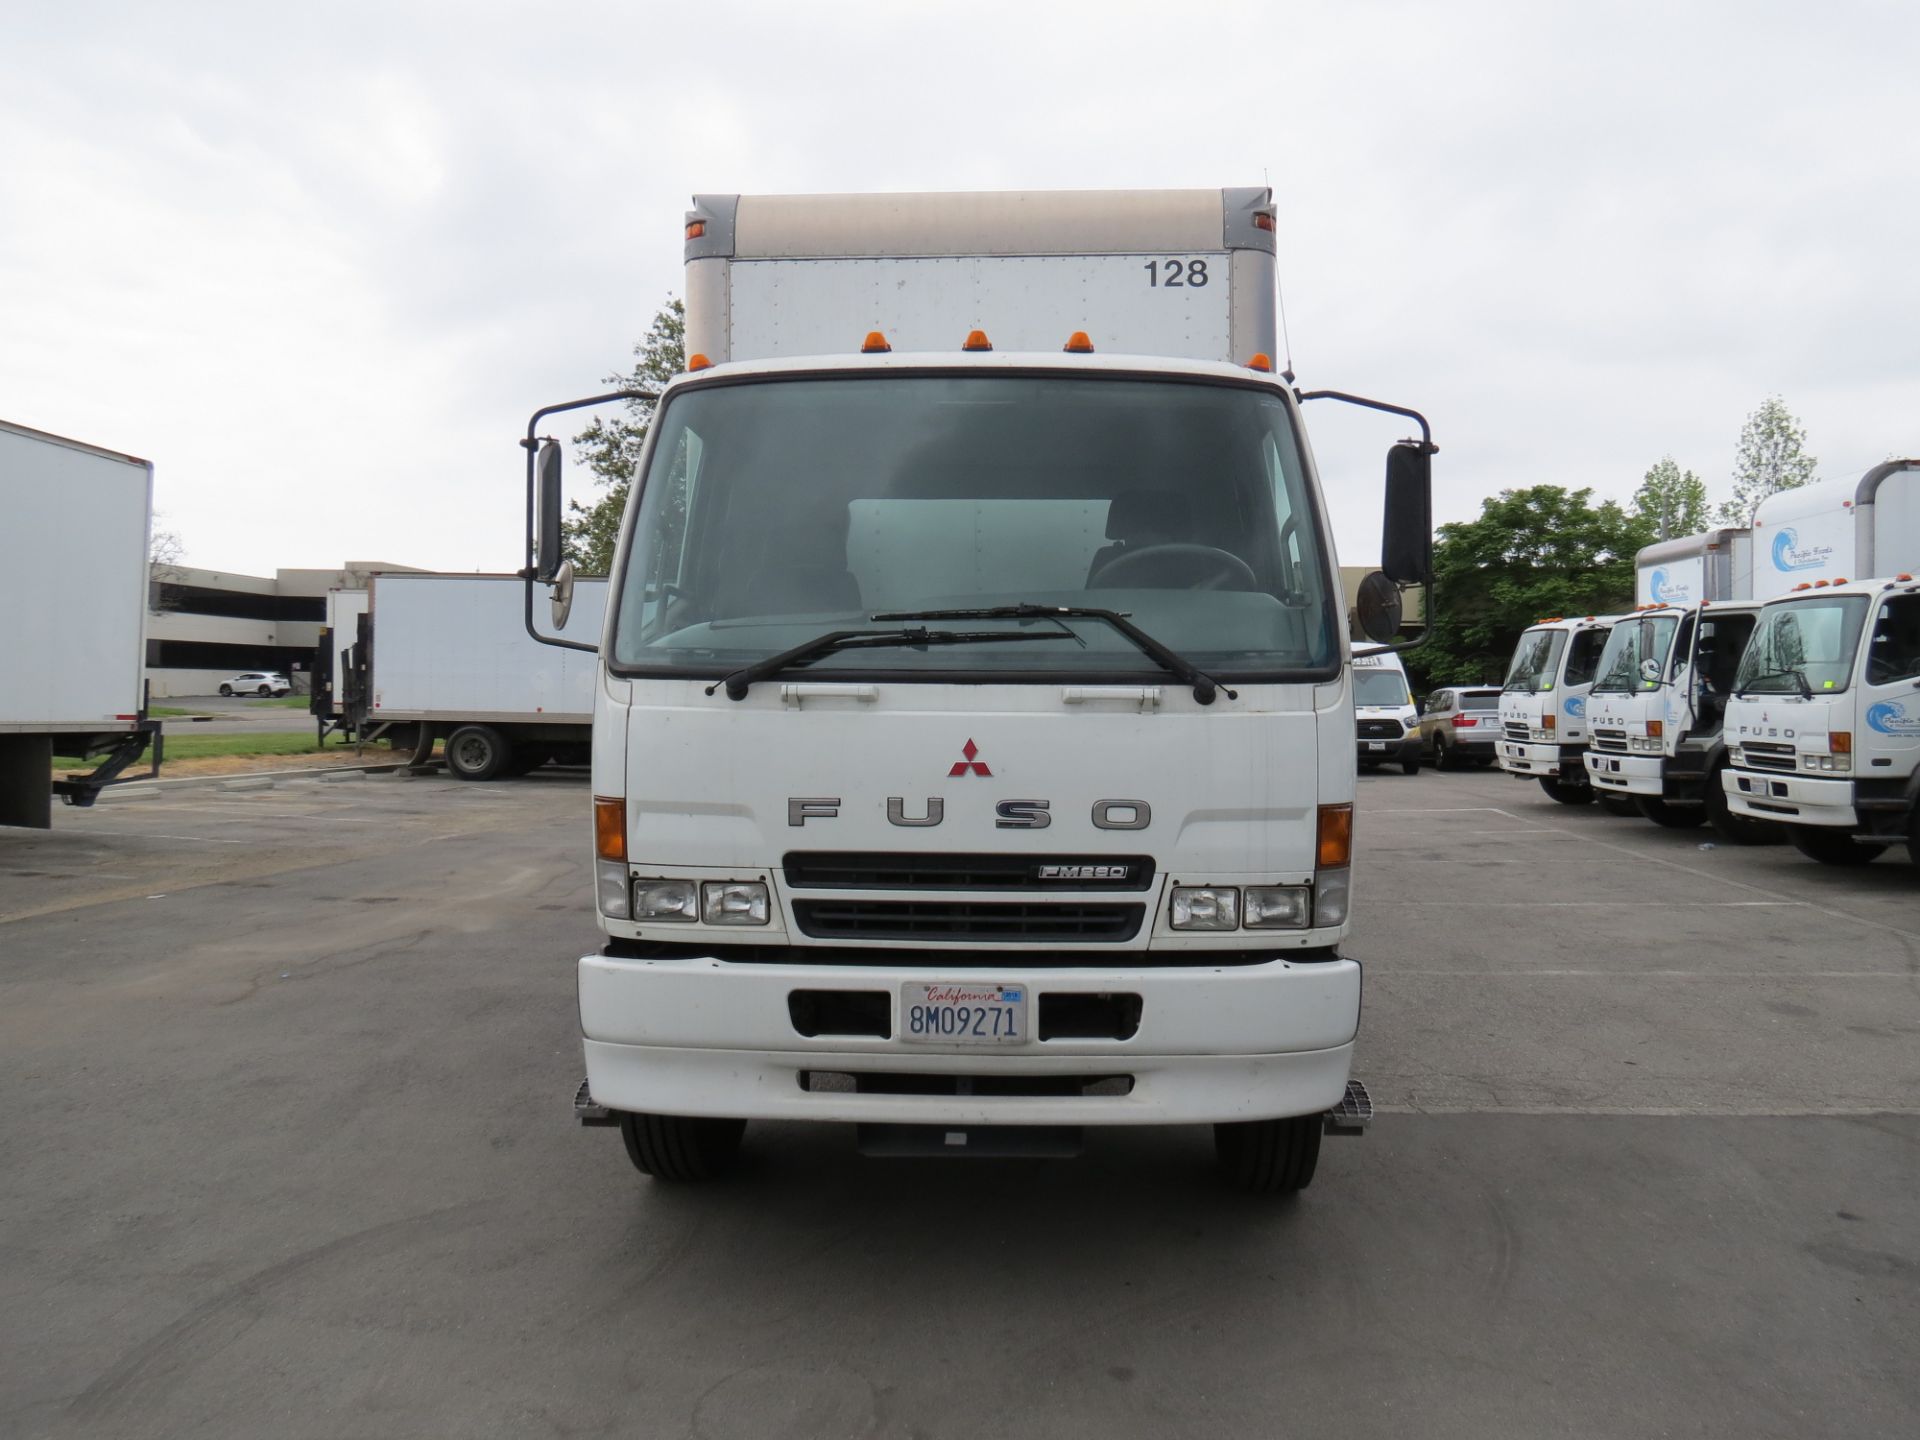 2007 Mitsubishi Fuso 28' FM-260 Box Truck W/Lift Gate, Manual Transmission, #128, VIN: